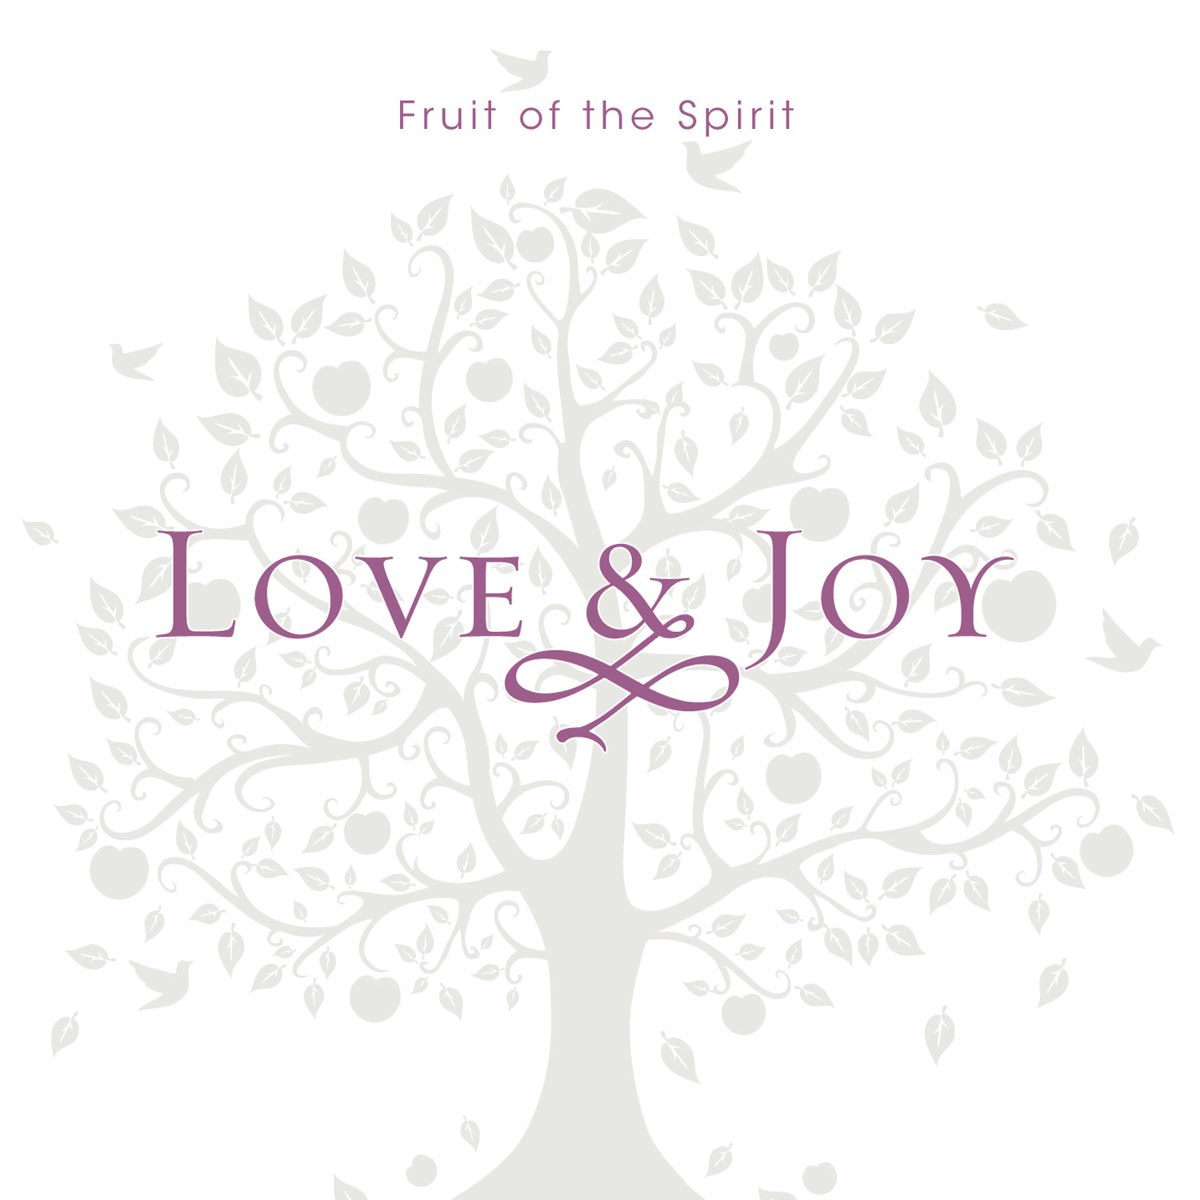 Loving Joy. Love-Spirit приват. Love Joy группа. Форумсмотри Love Spirit. Лове джой